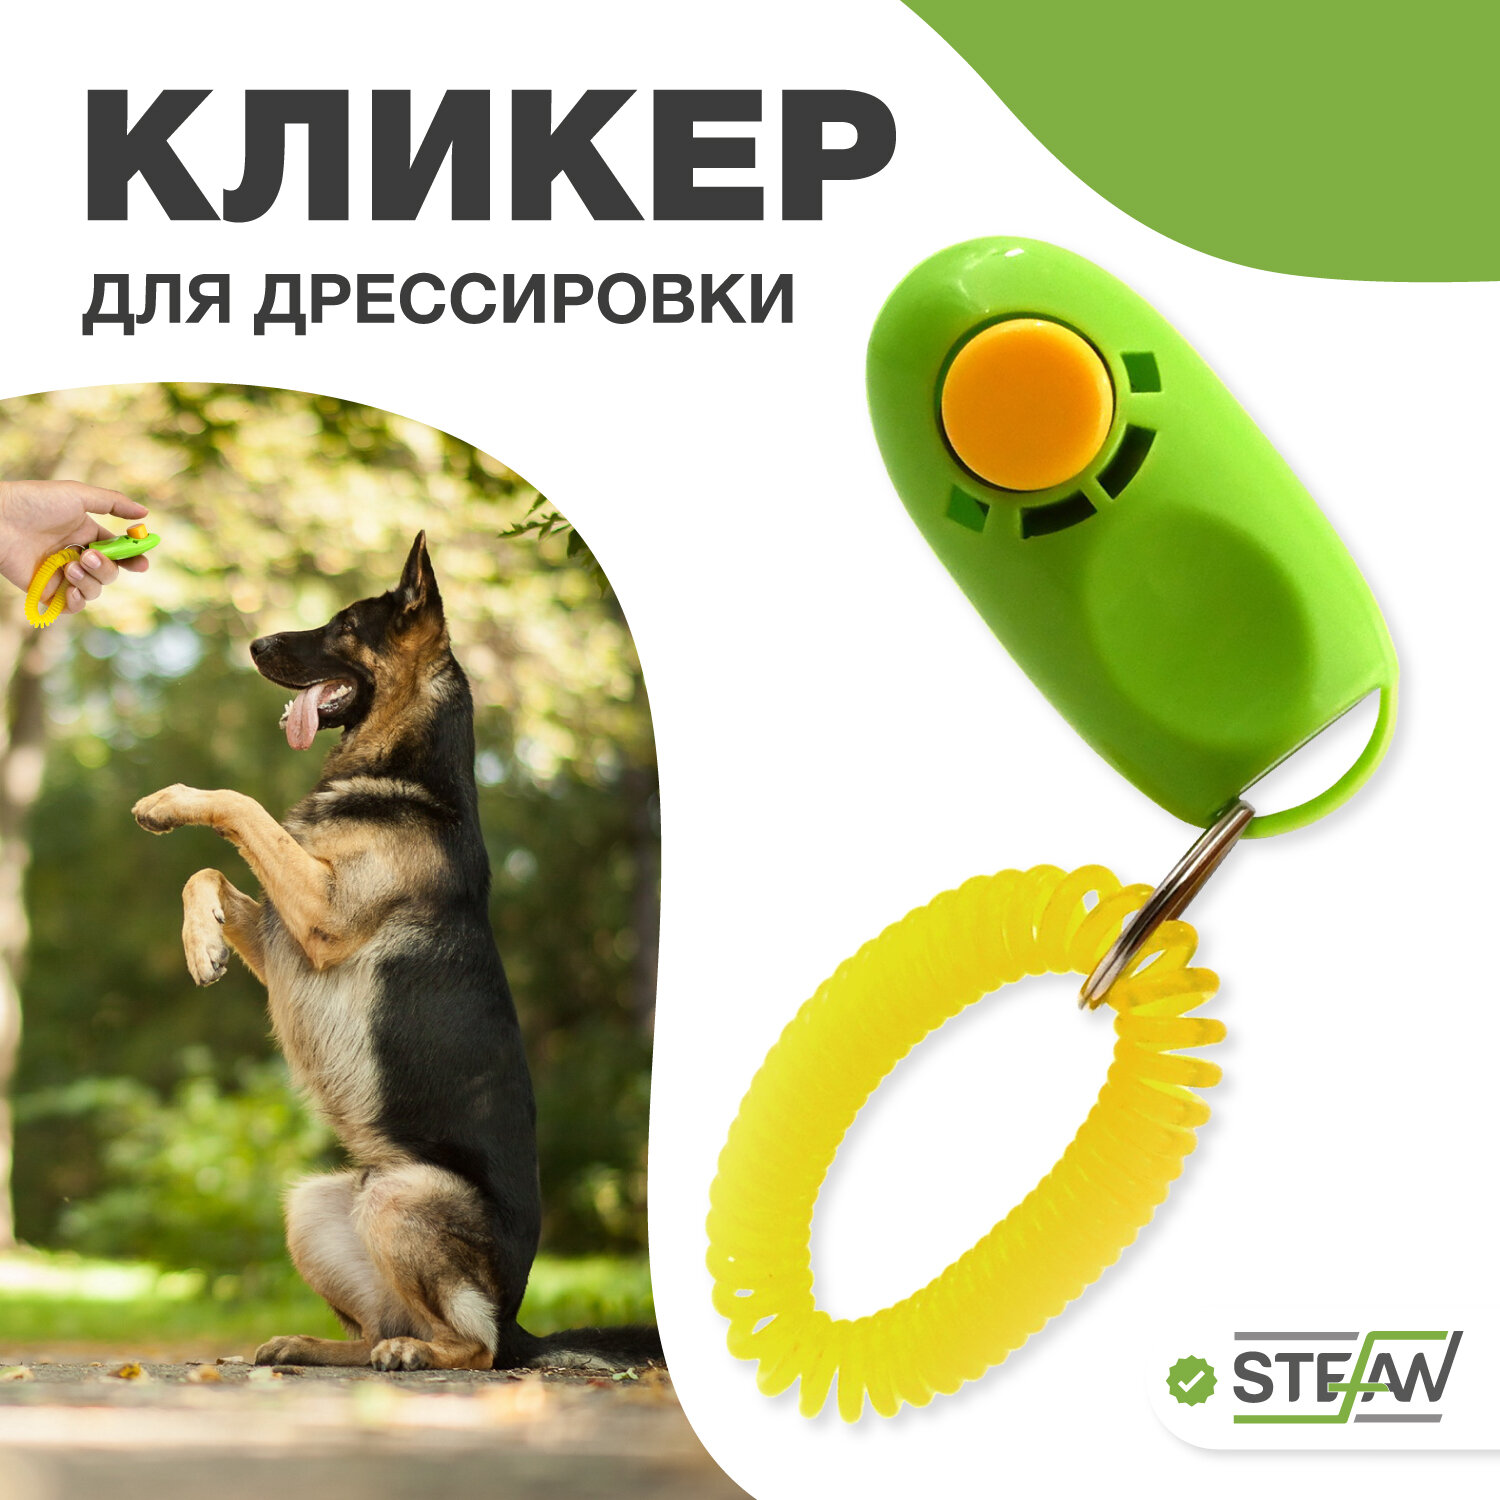 Кликер для дрессировки собак STEFAN (Штефан) GCT40